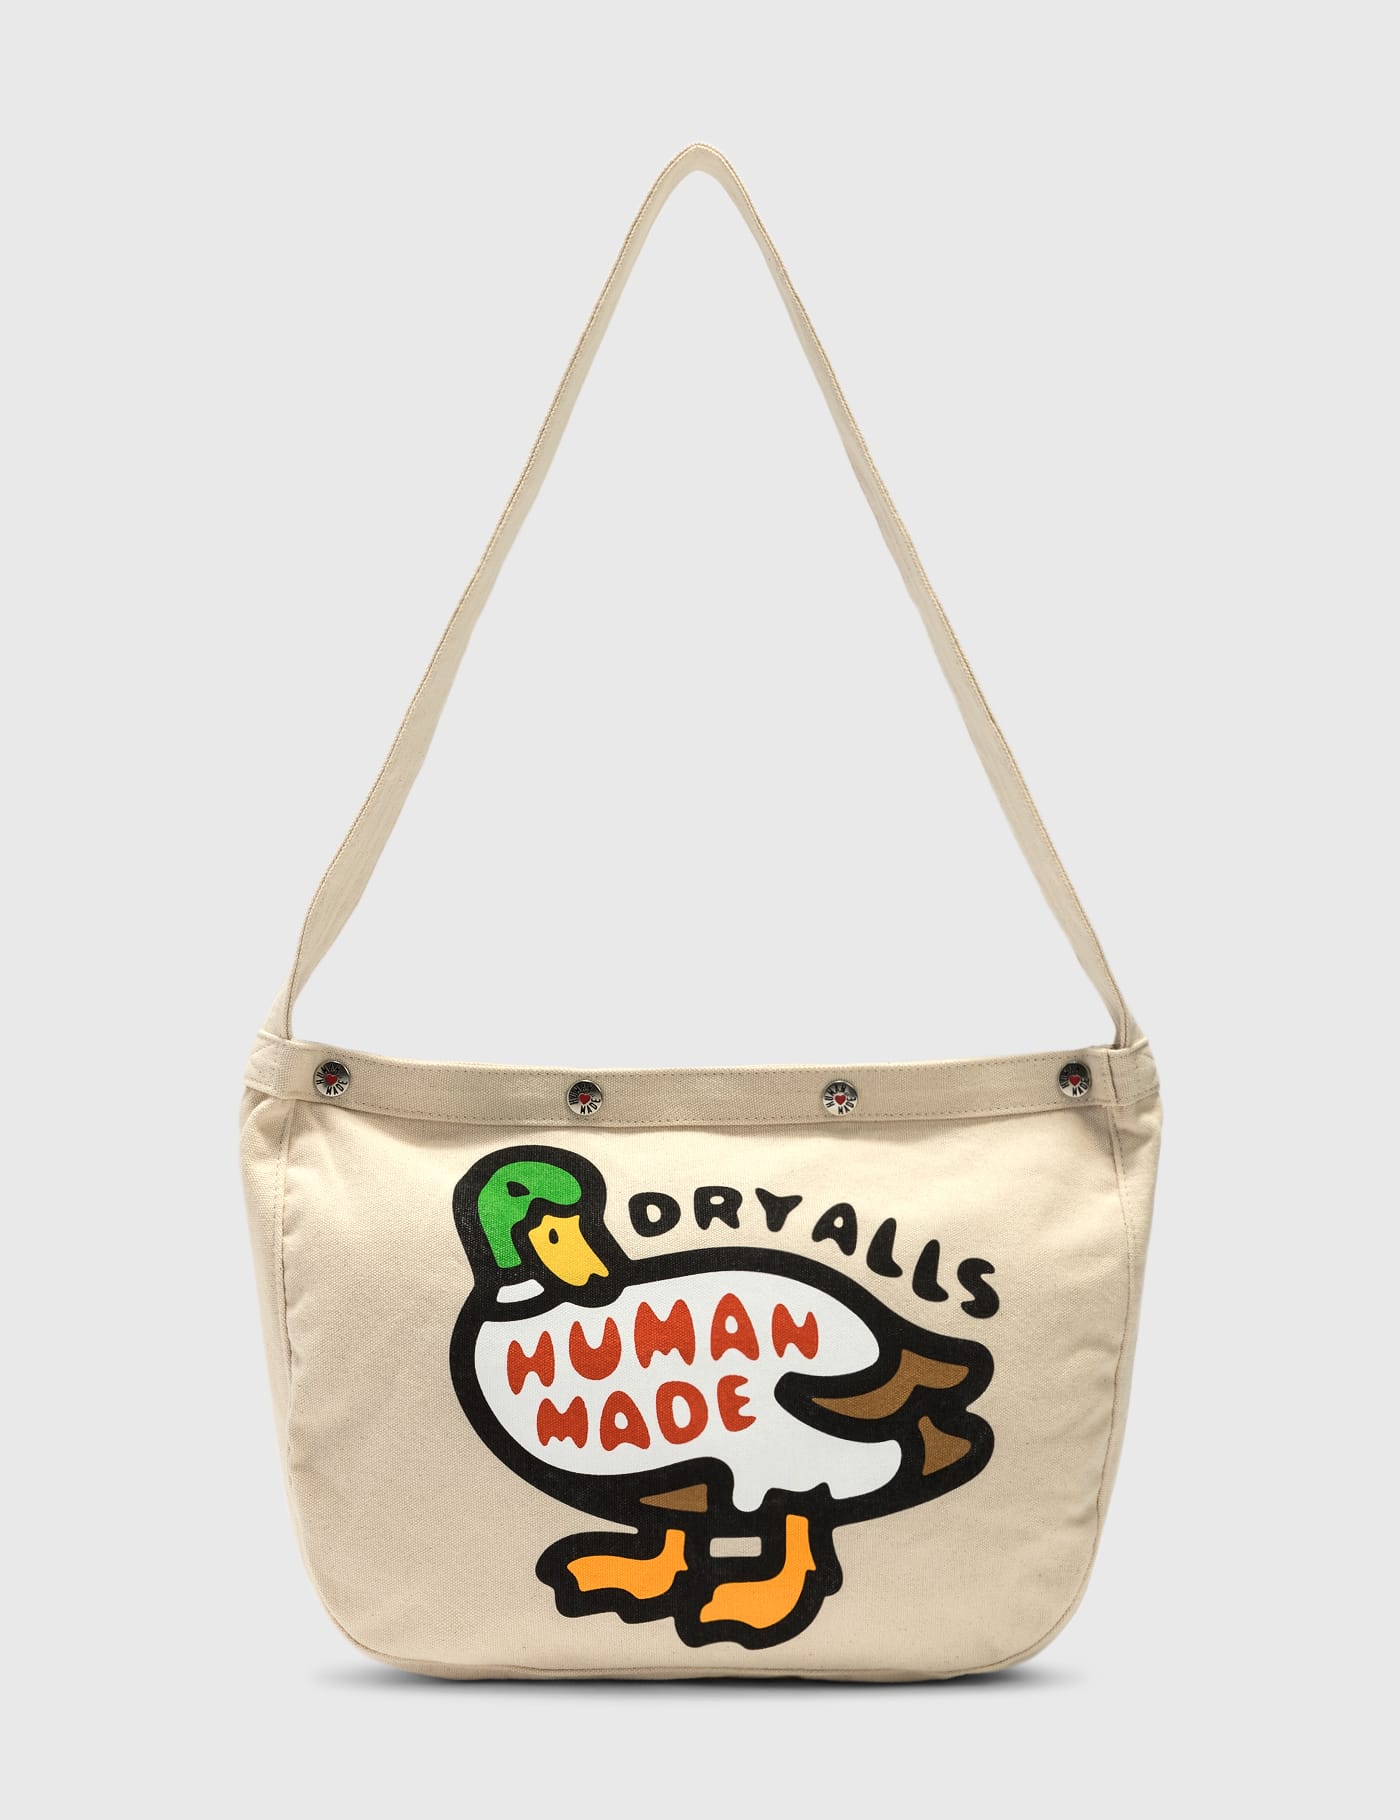 Human Made - Paperboy Bag | HBX - HYPEBEAST 为您搜罗全球潮流时尚品牌